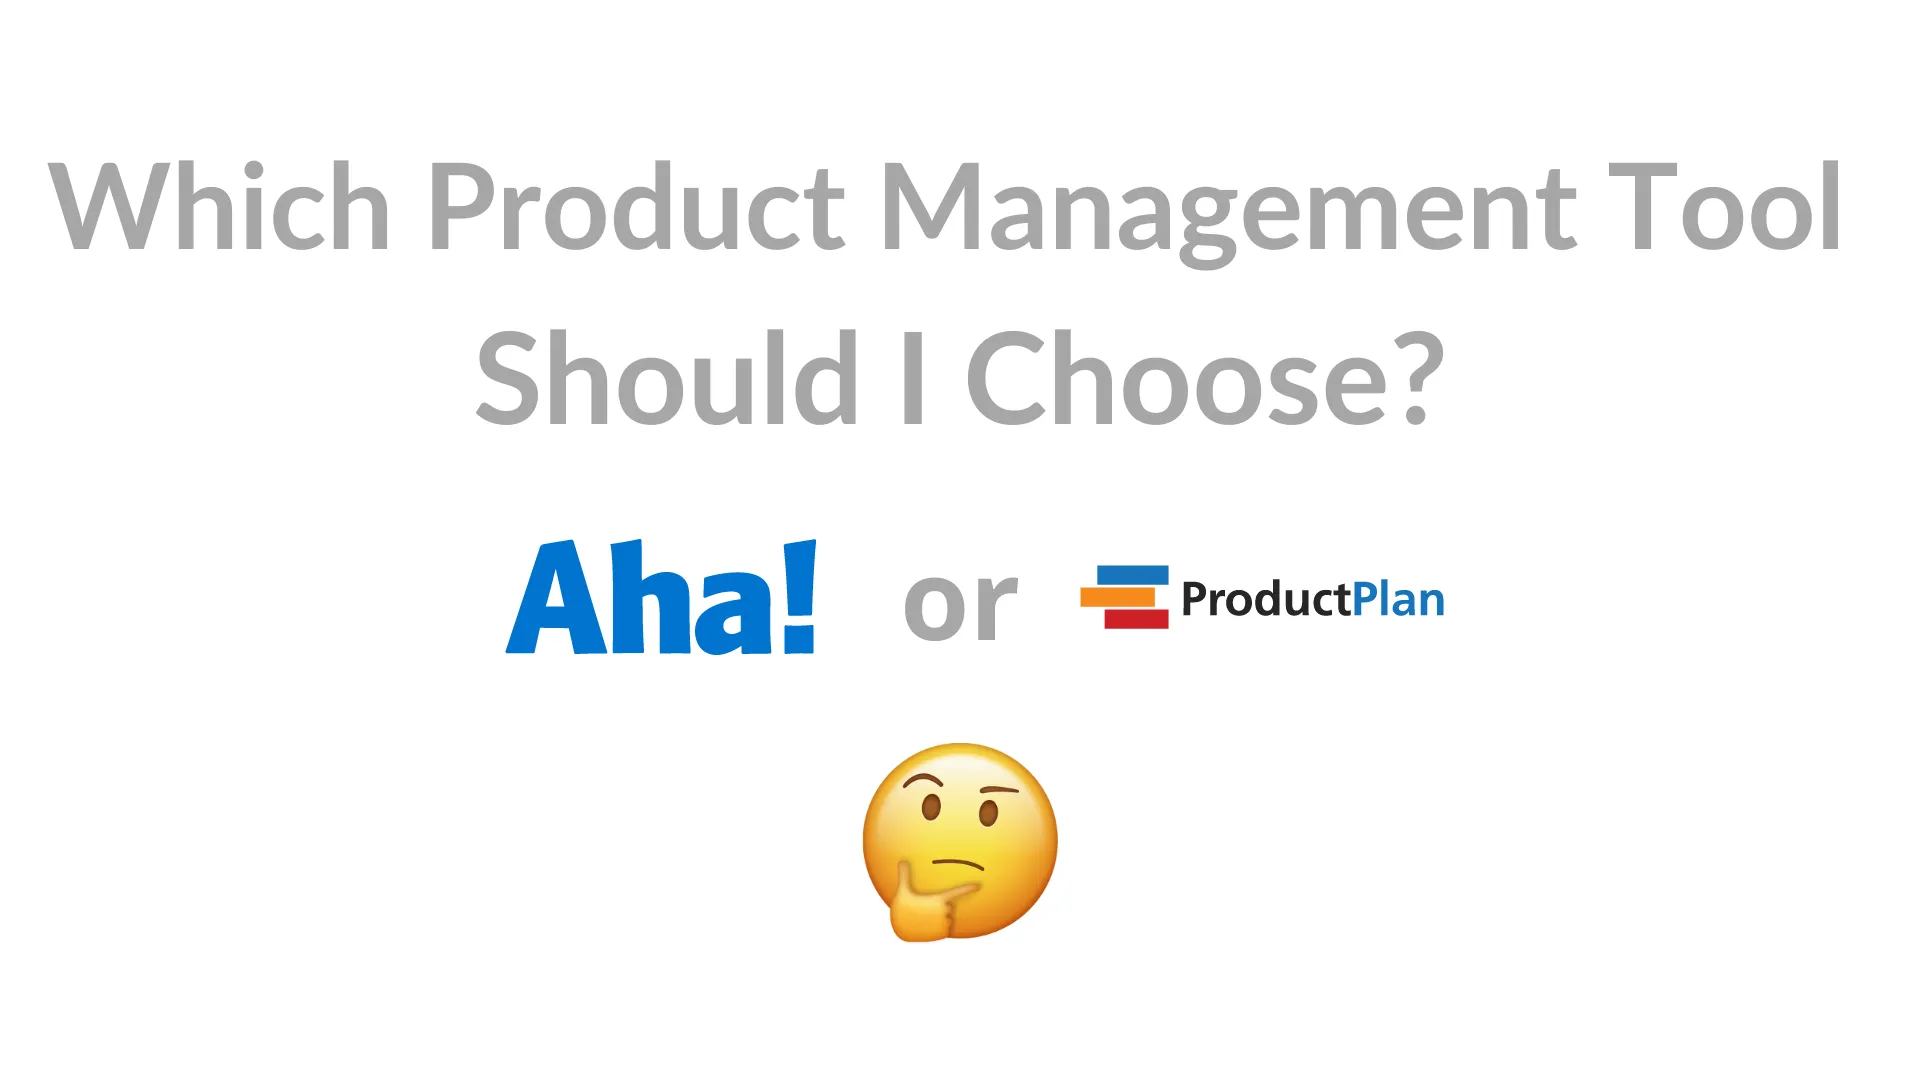 ProductPlan vs. Aha comparison with emoji